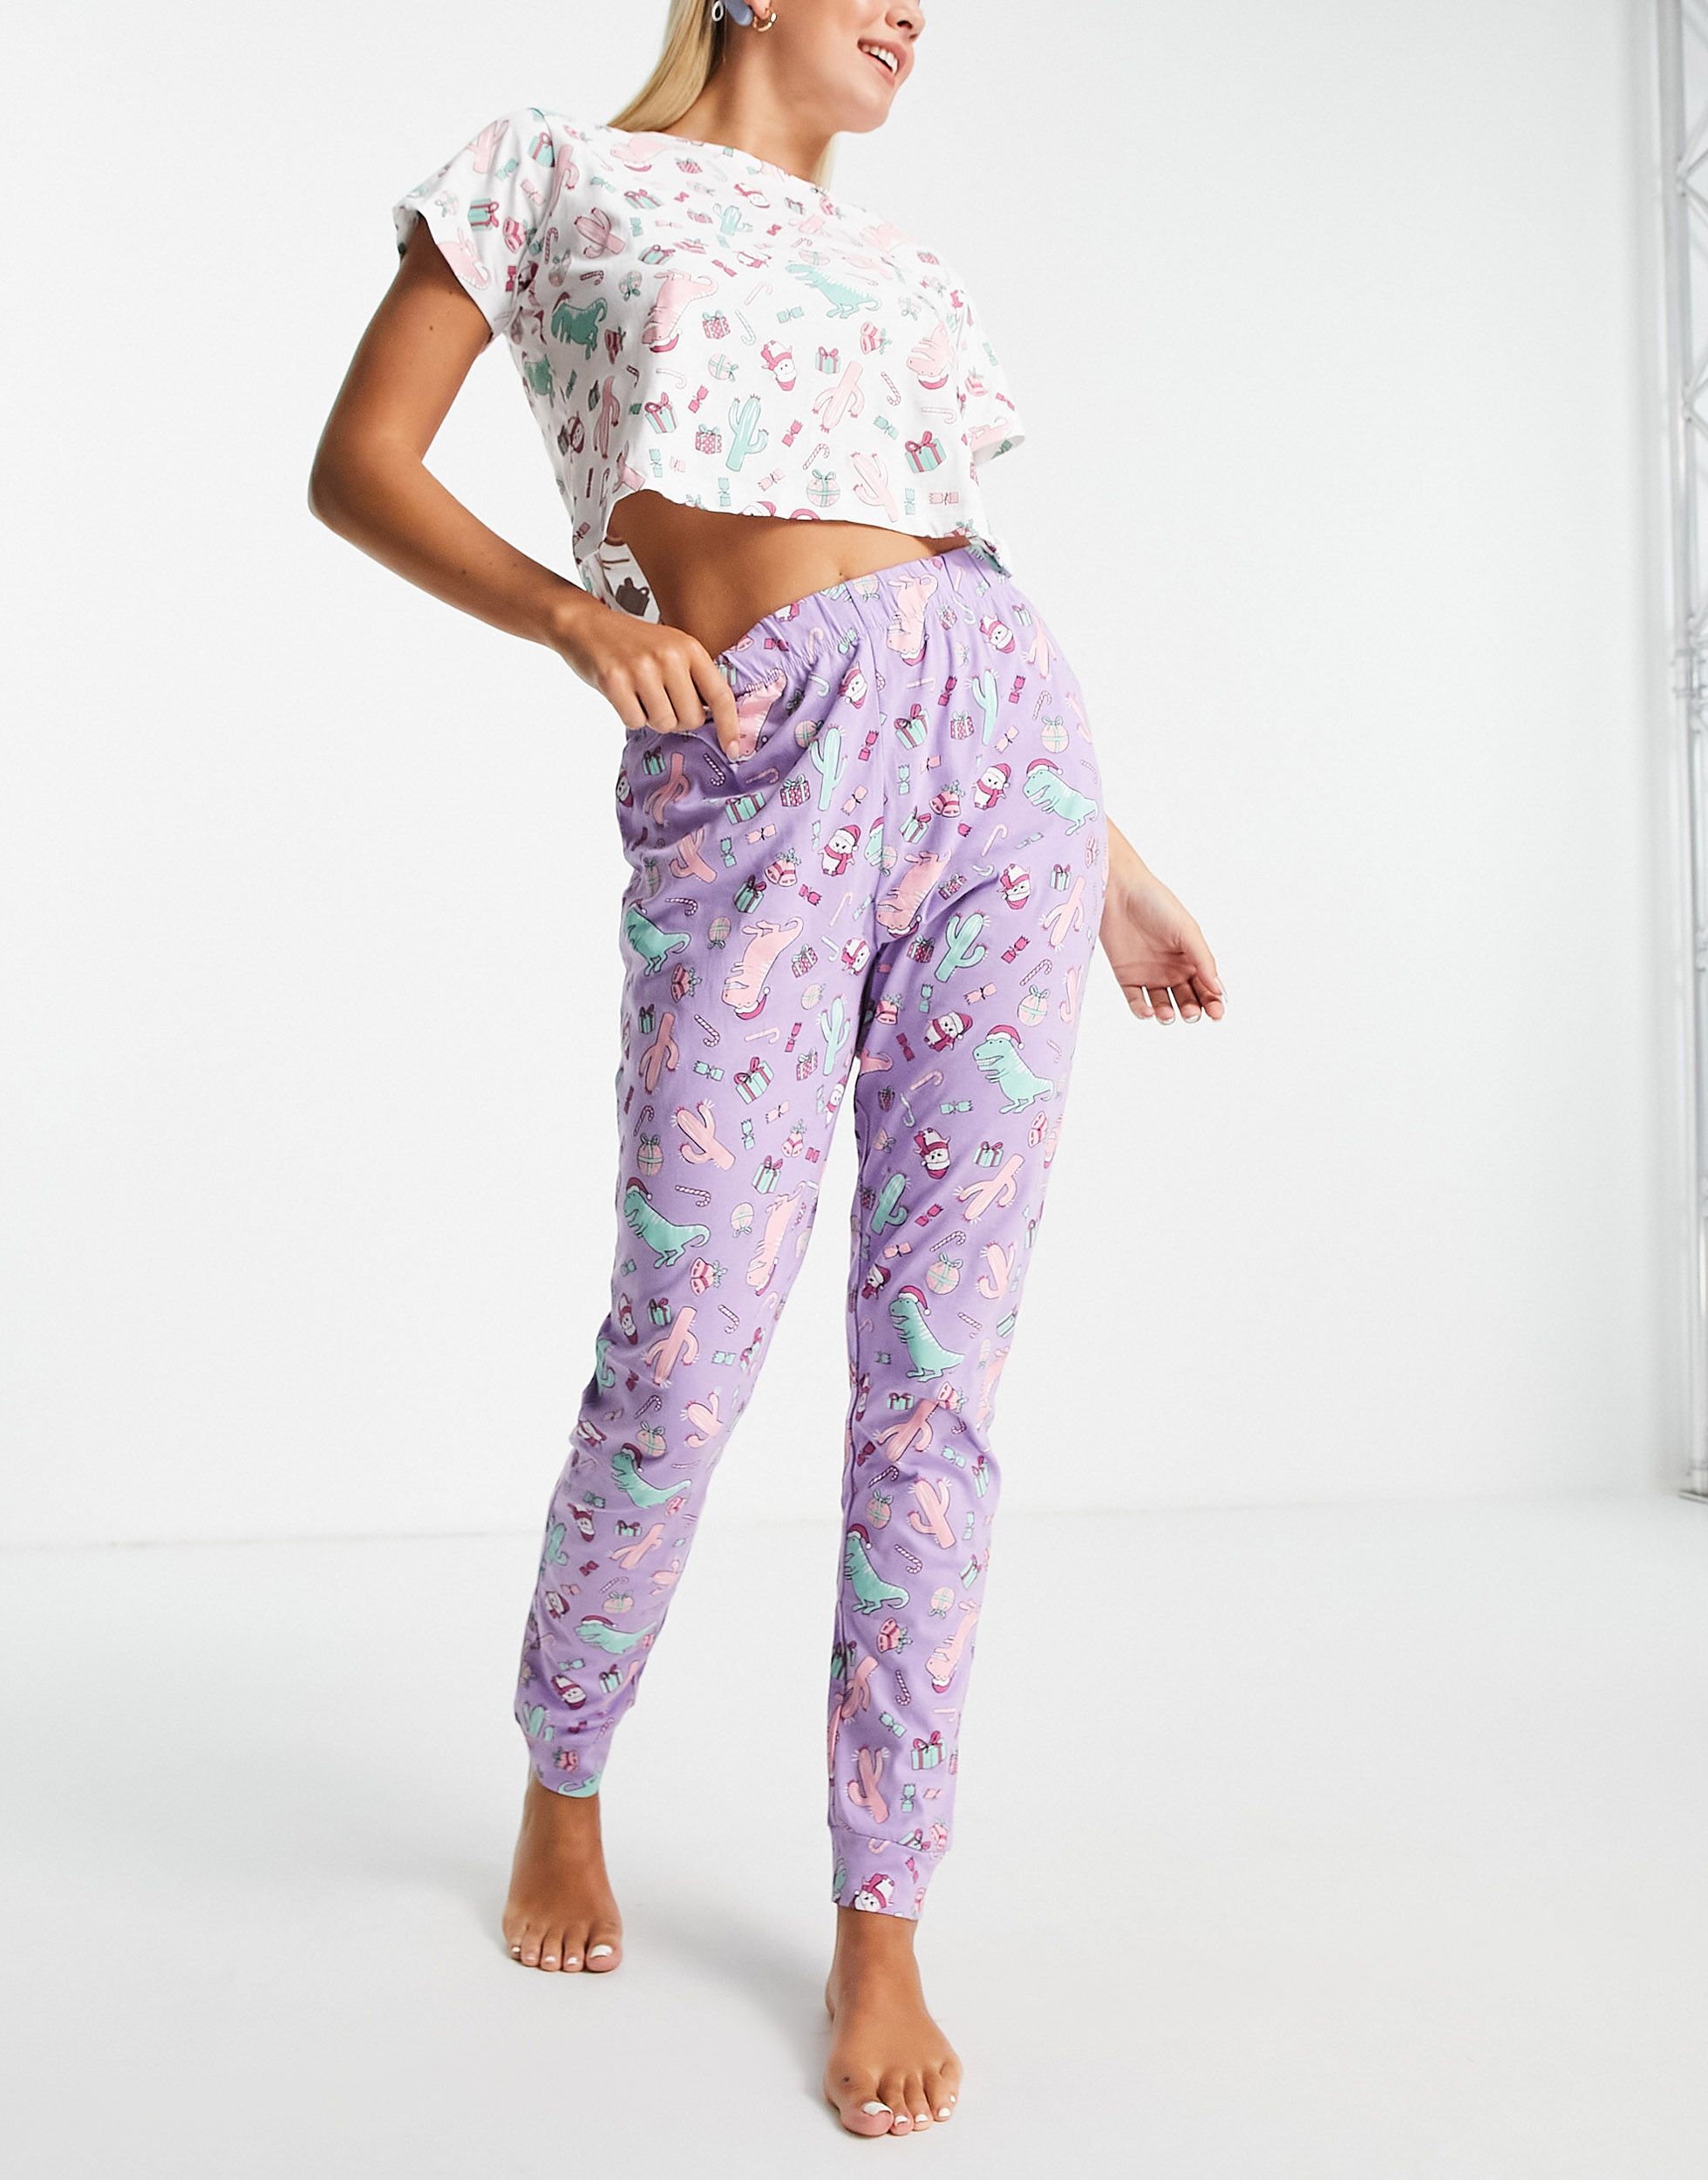 Personalised Girl's Cami Pyjama Set in Satin Nightwear Summer PJ's Unicorn 